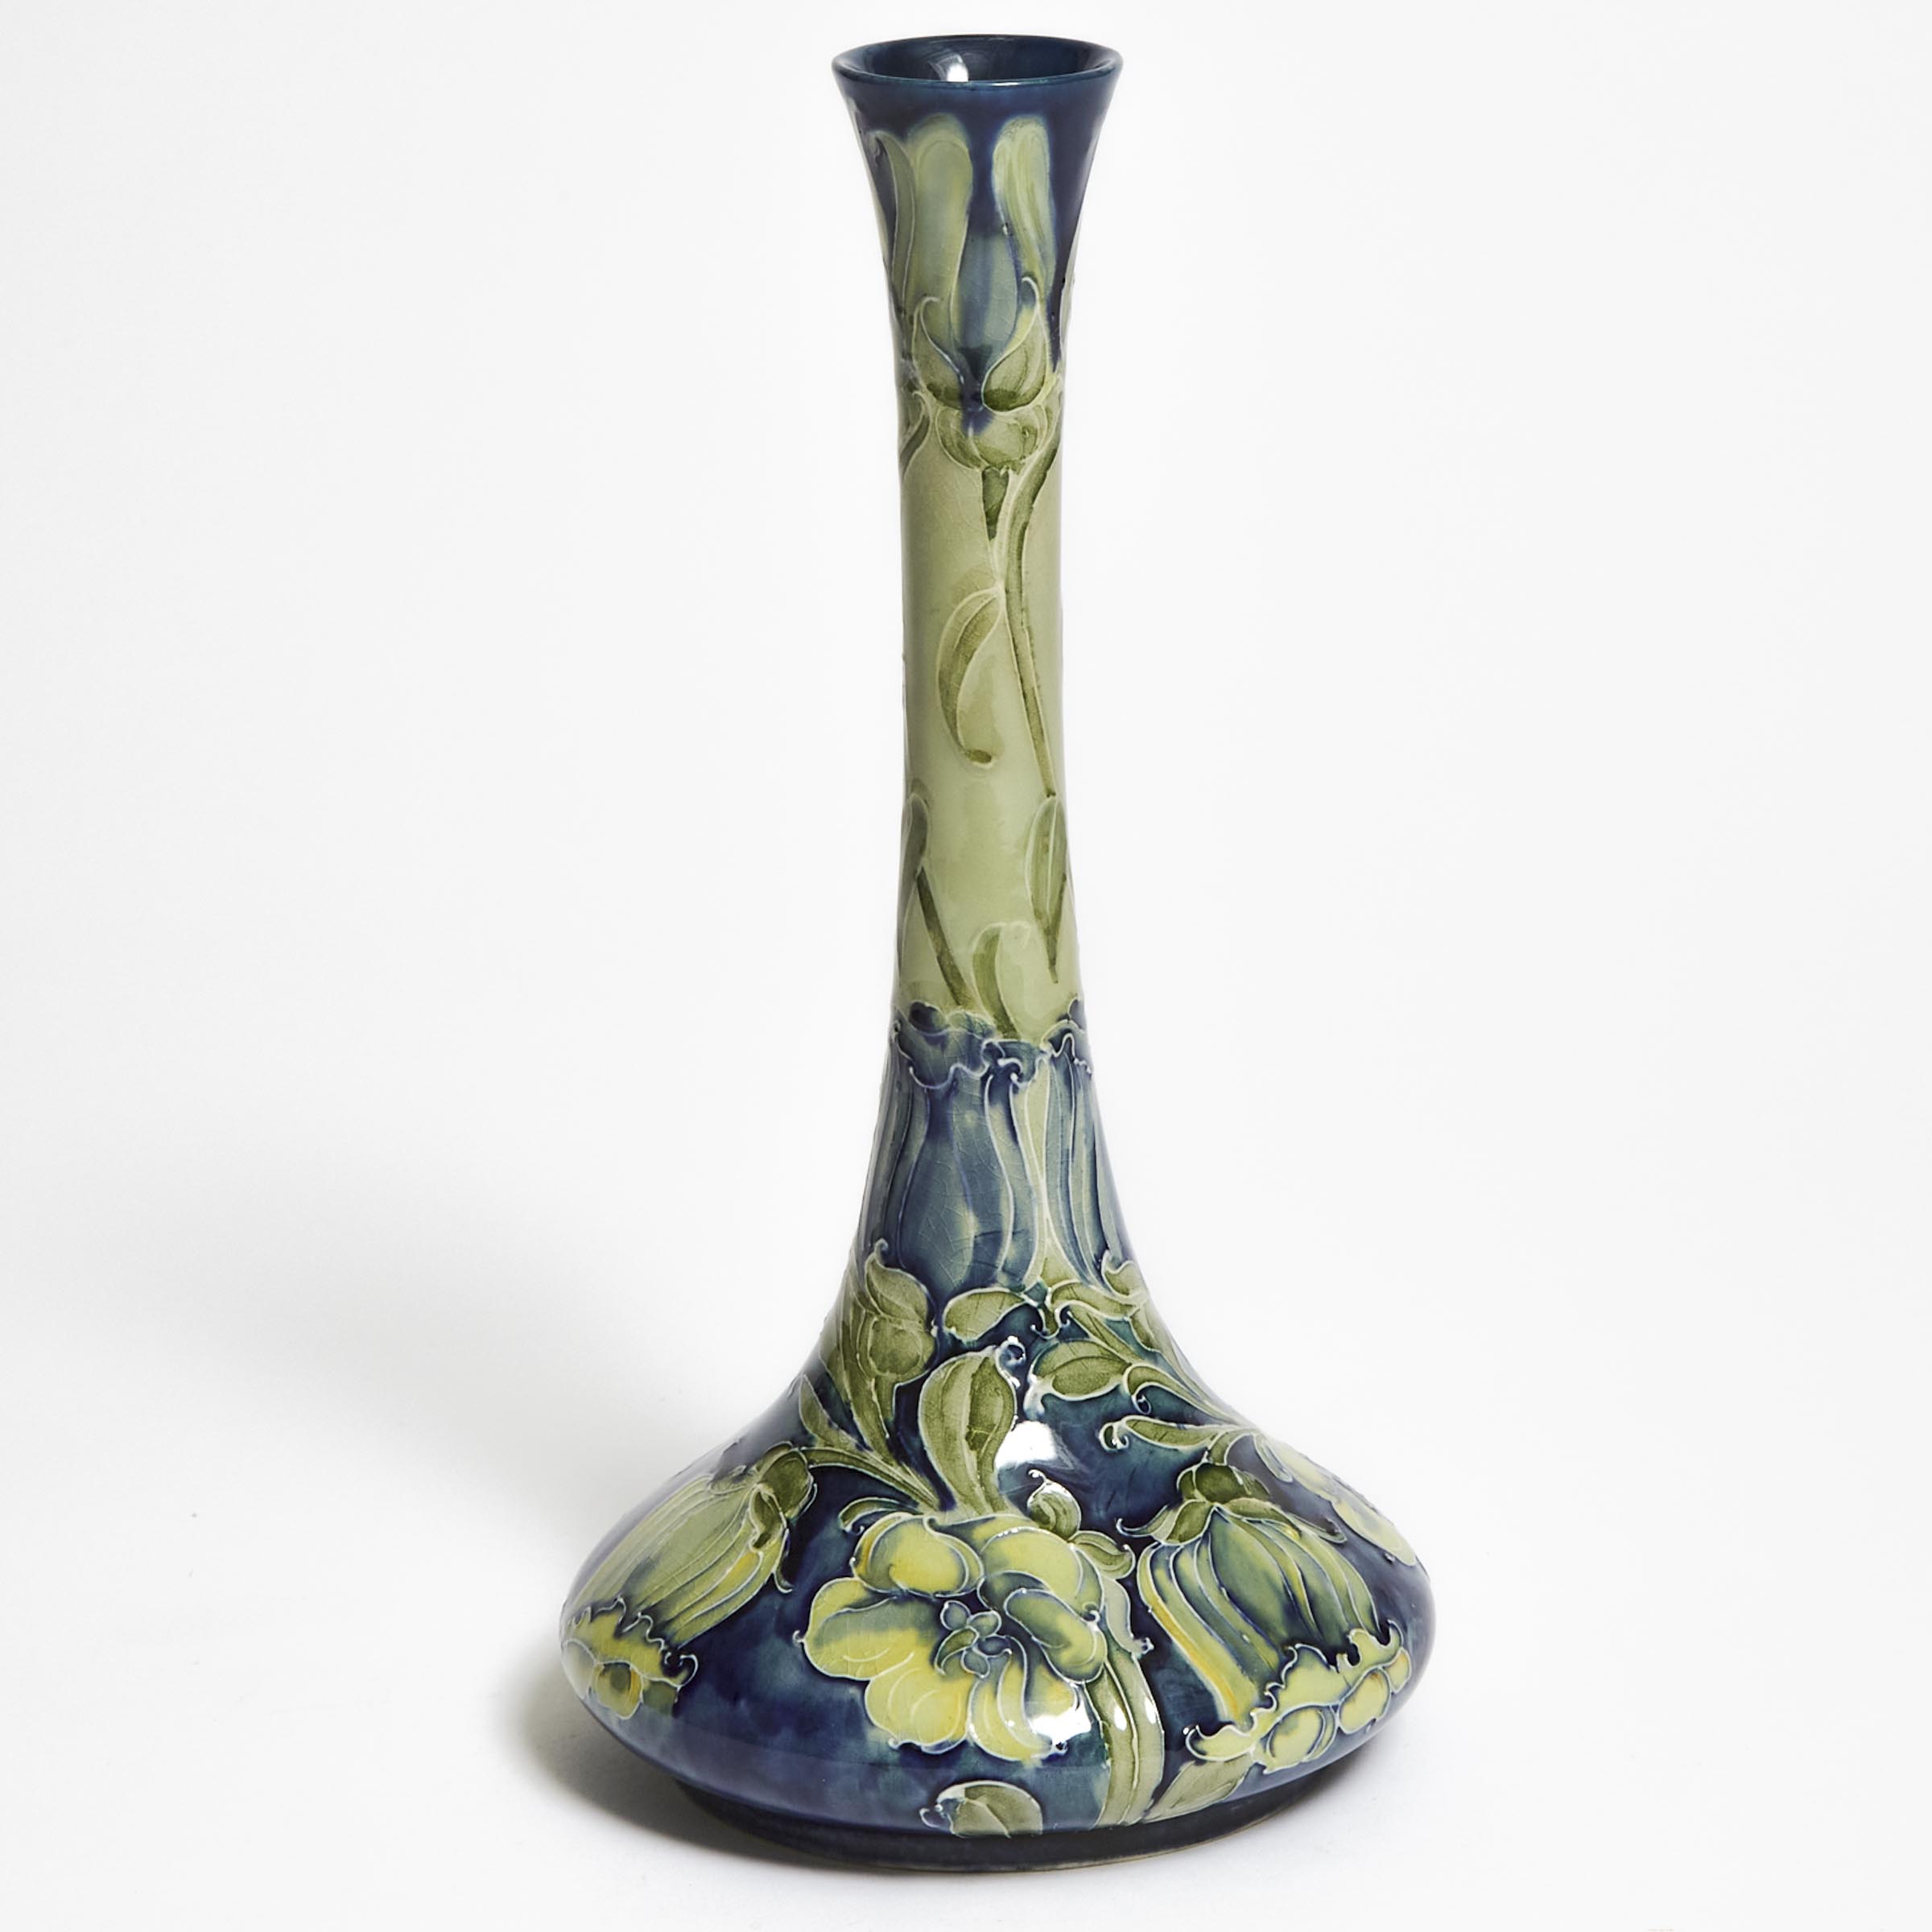 Macintyre Moorcroft Florian Vase, for Liberty & Co., c.1902-03